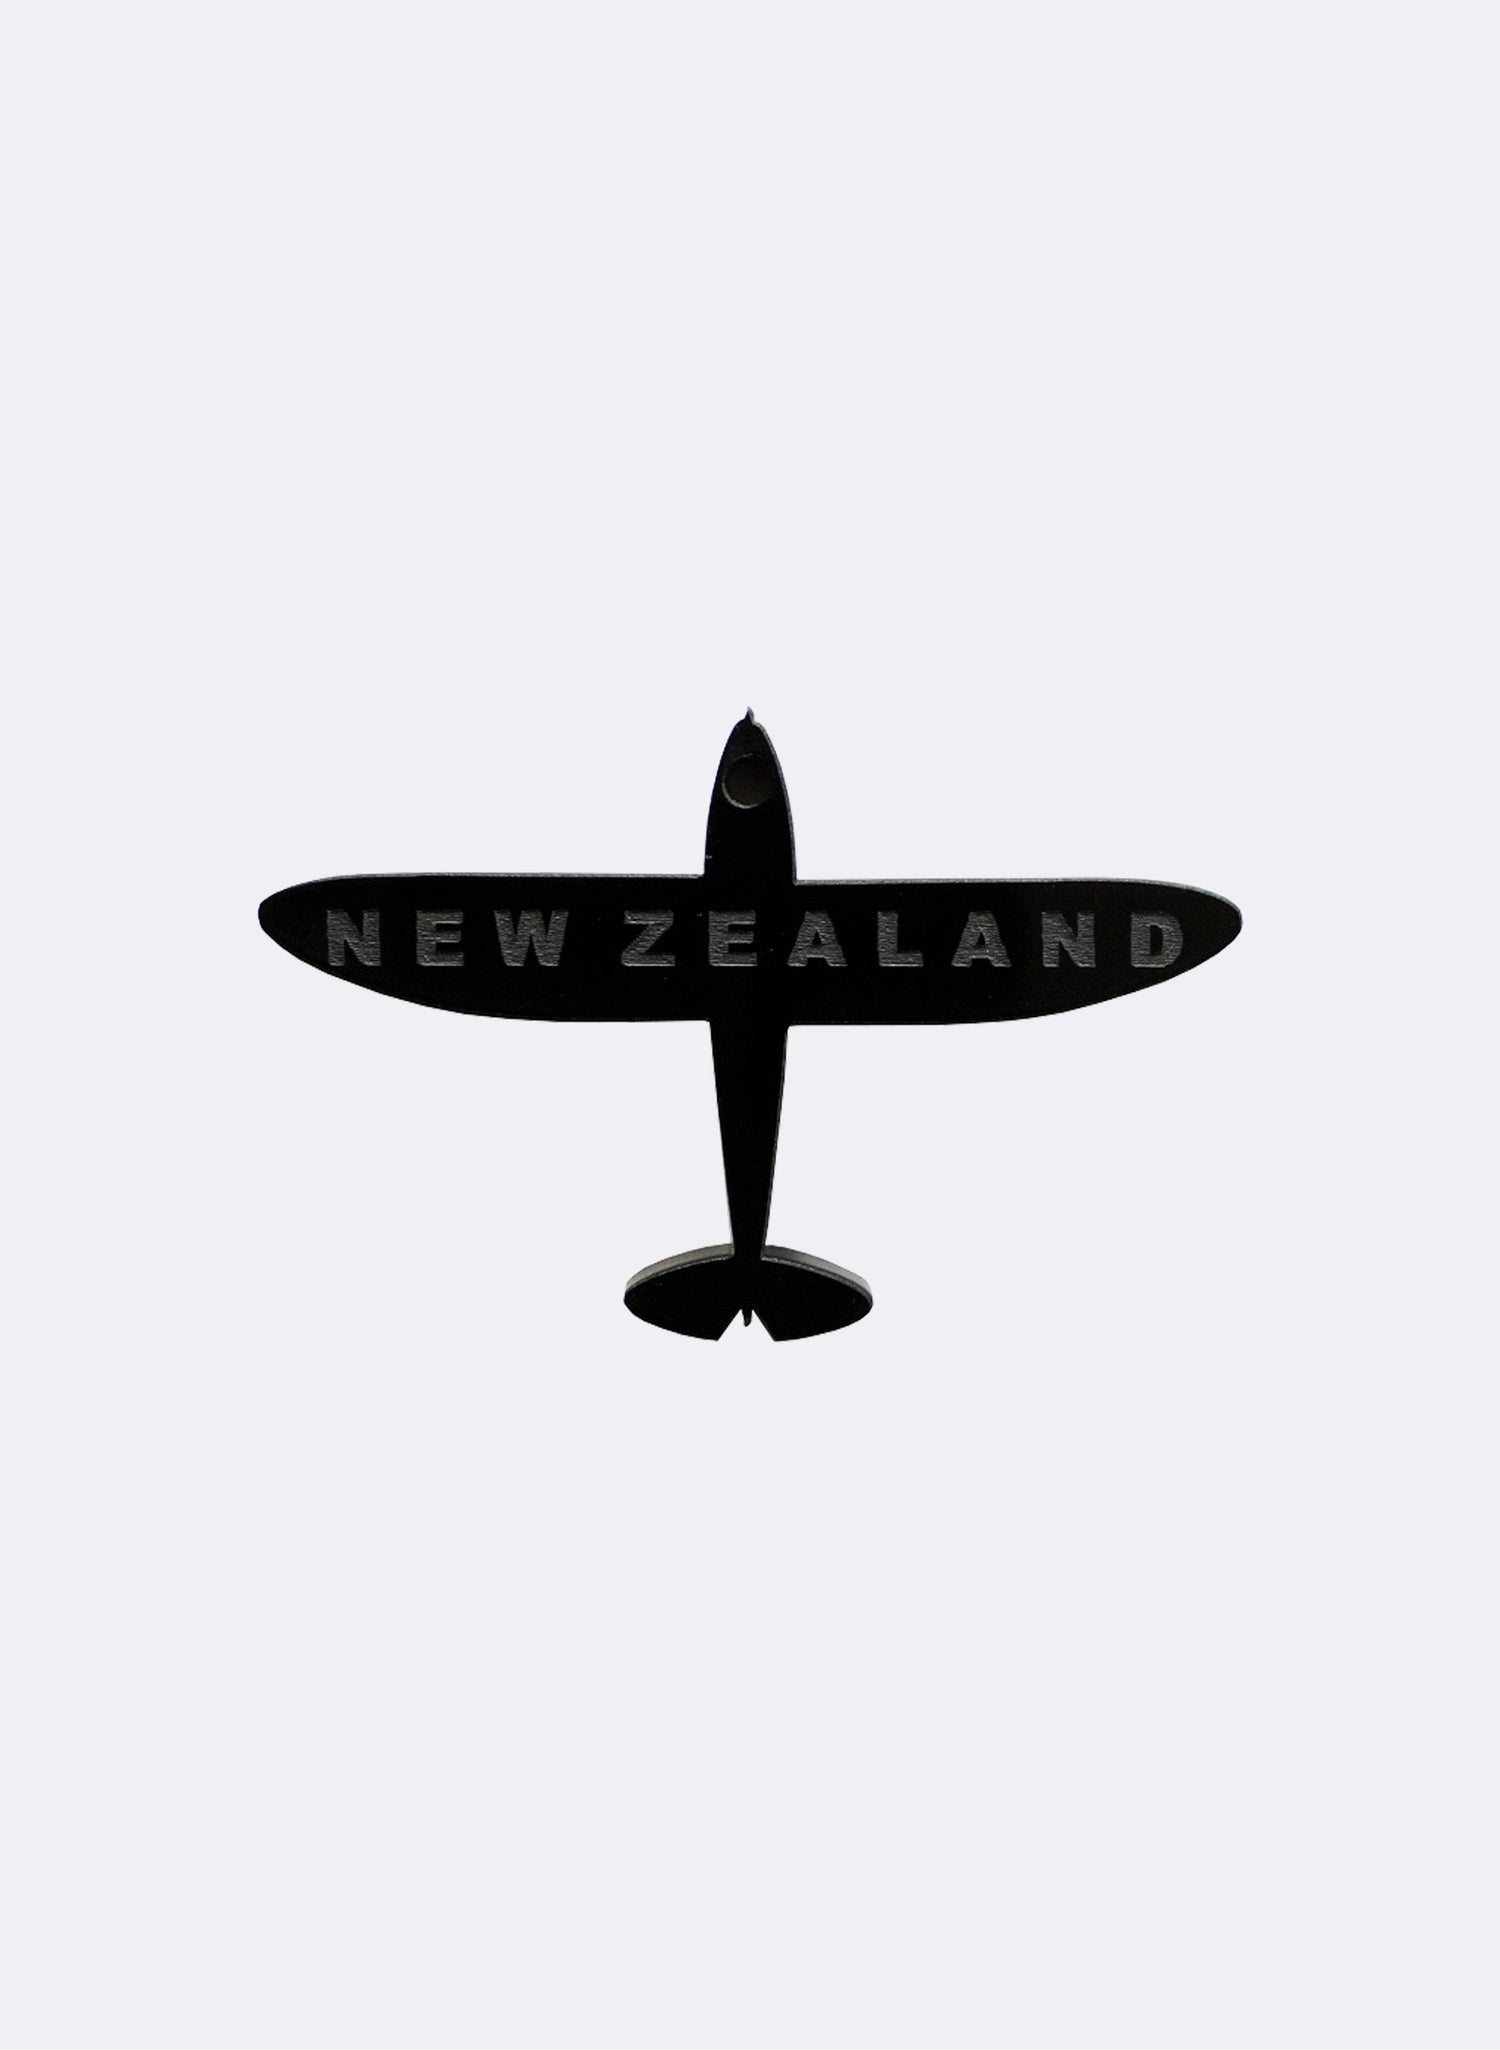 Destination Planes - Locations of New Zealand